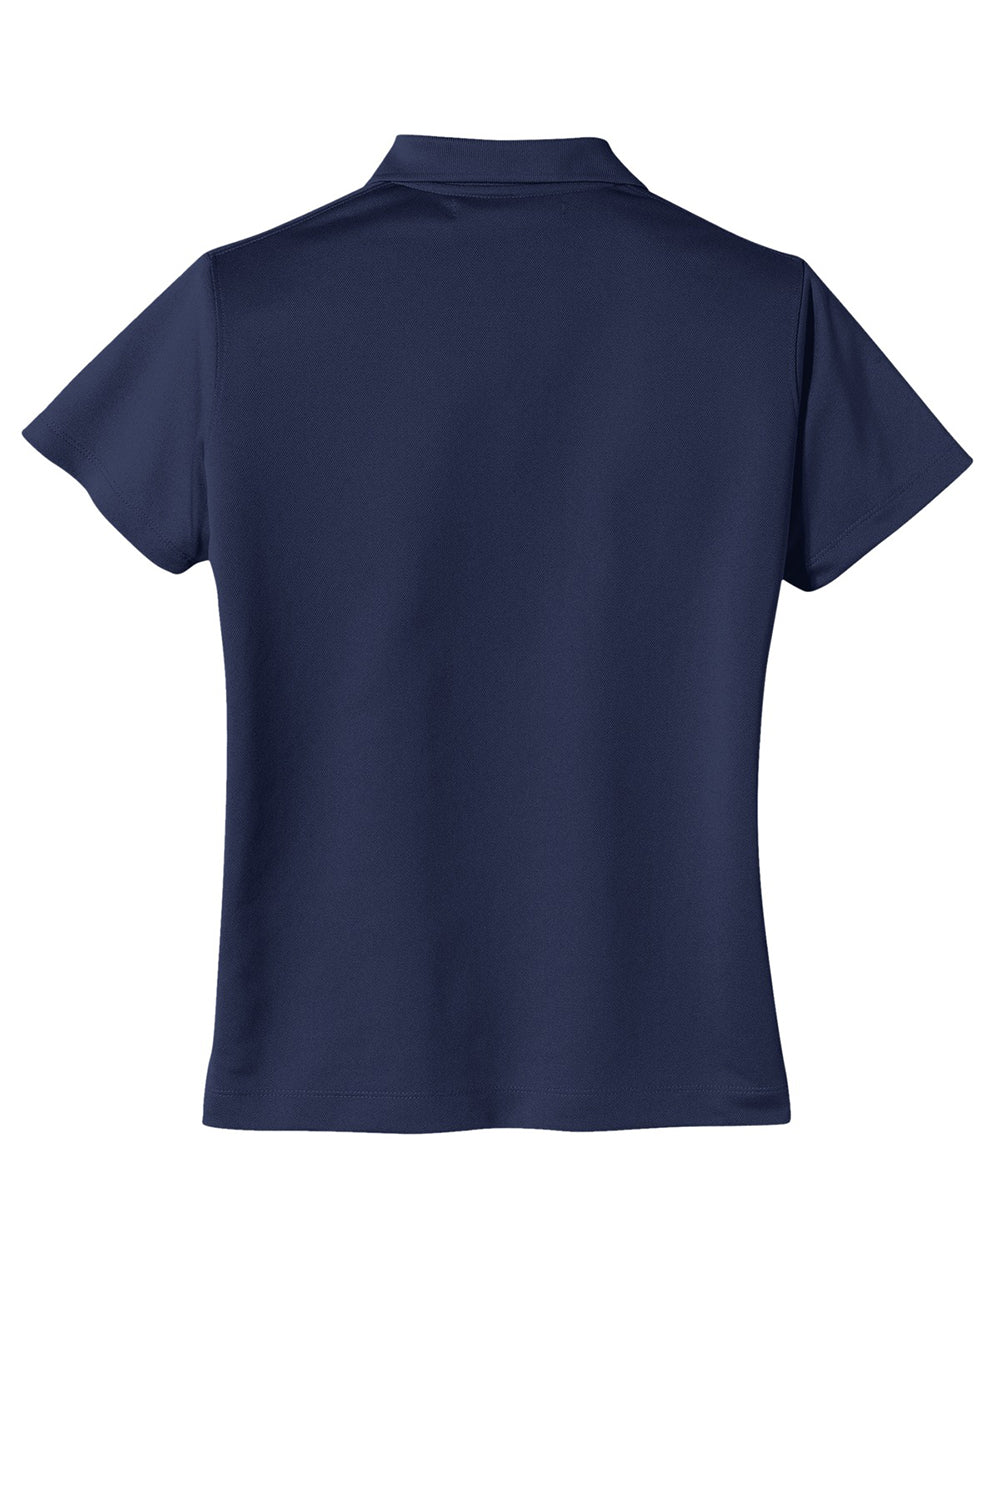 Nike 203697 Womens Tech Basic Dri-Fit Moisture Wicking Short Sleeve Polo Shirt Midnight Navy Blue Flat Back